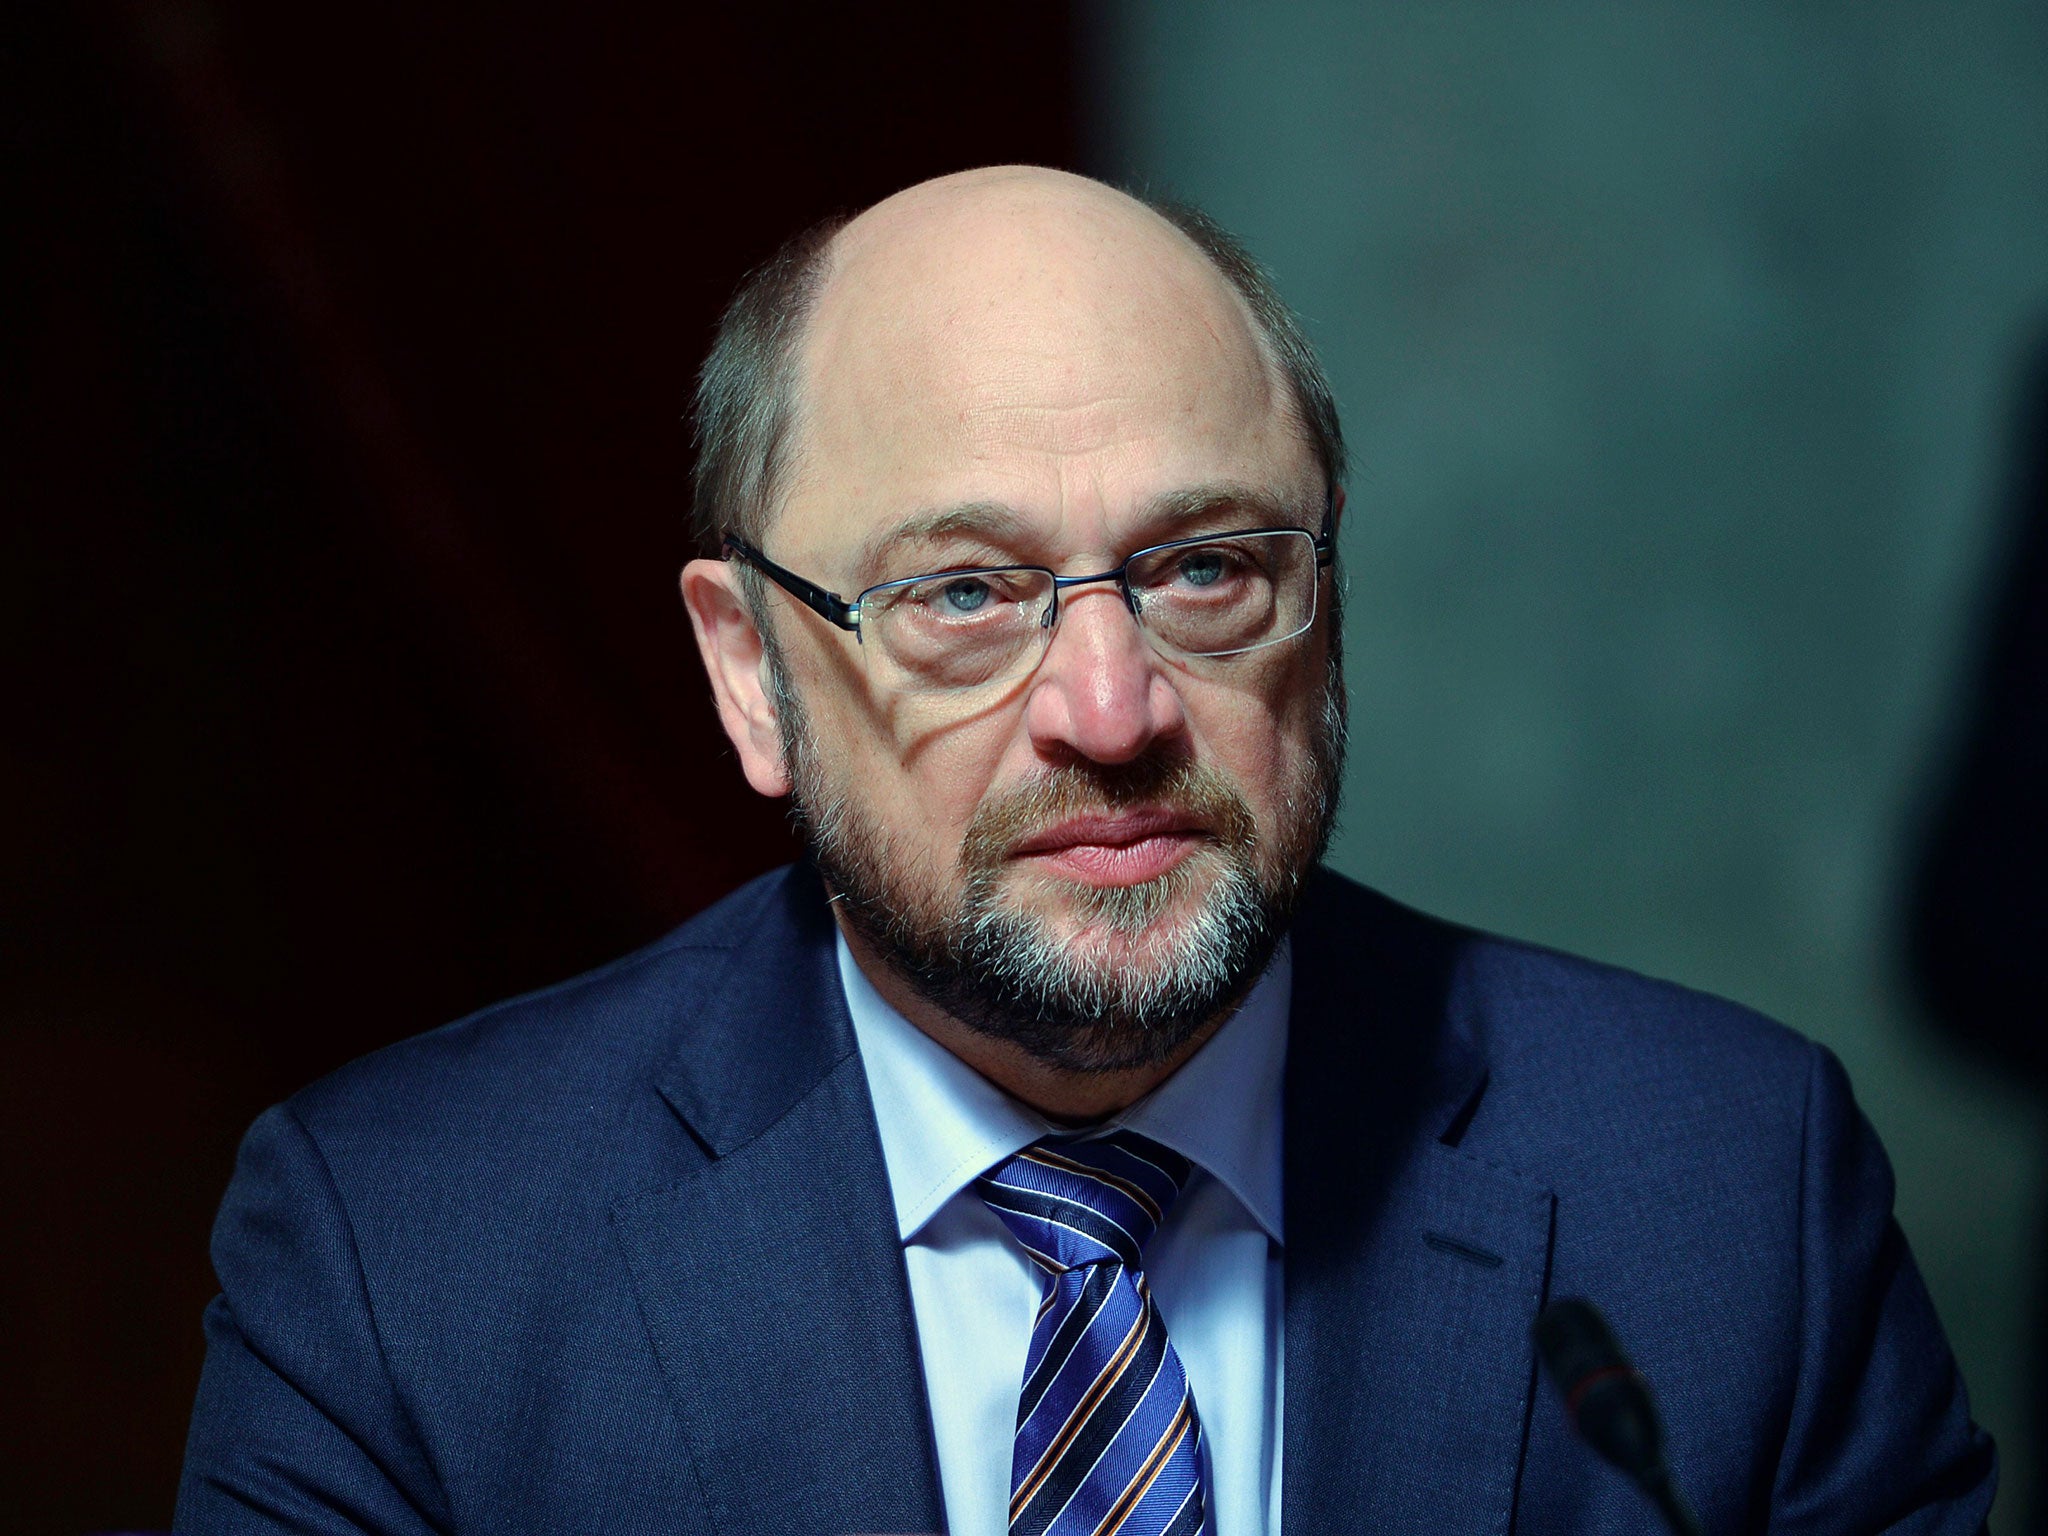 Martin Schulz, the President of the European Parliament, calls Poland’s reforms a coup